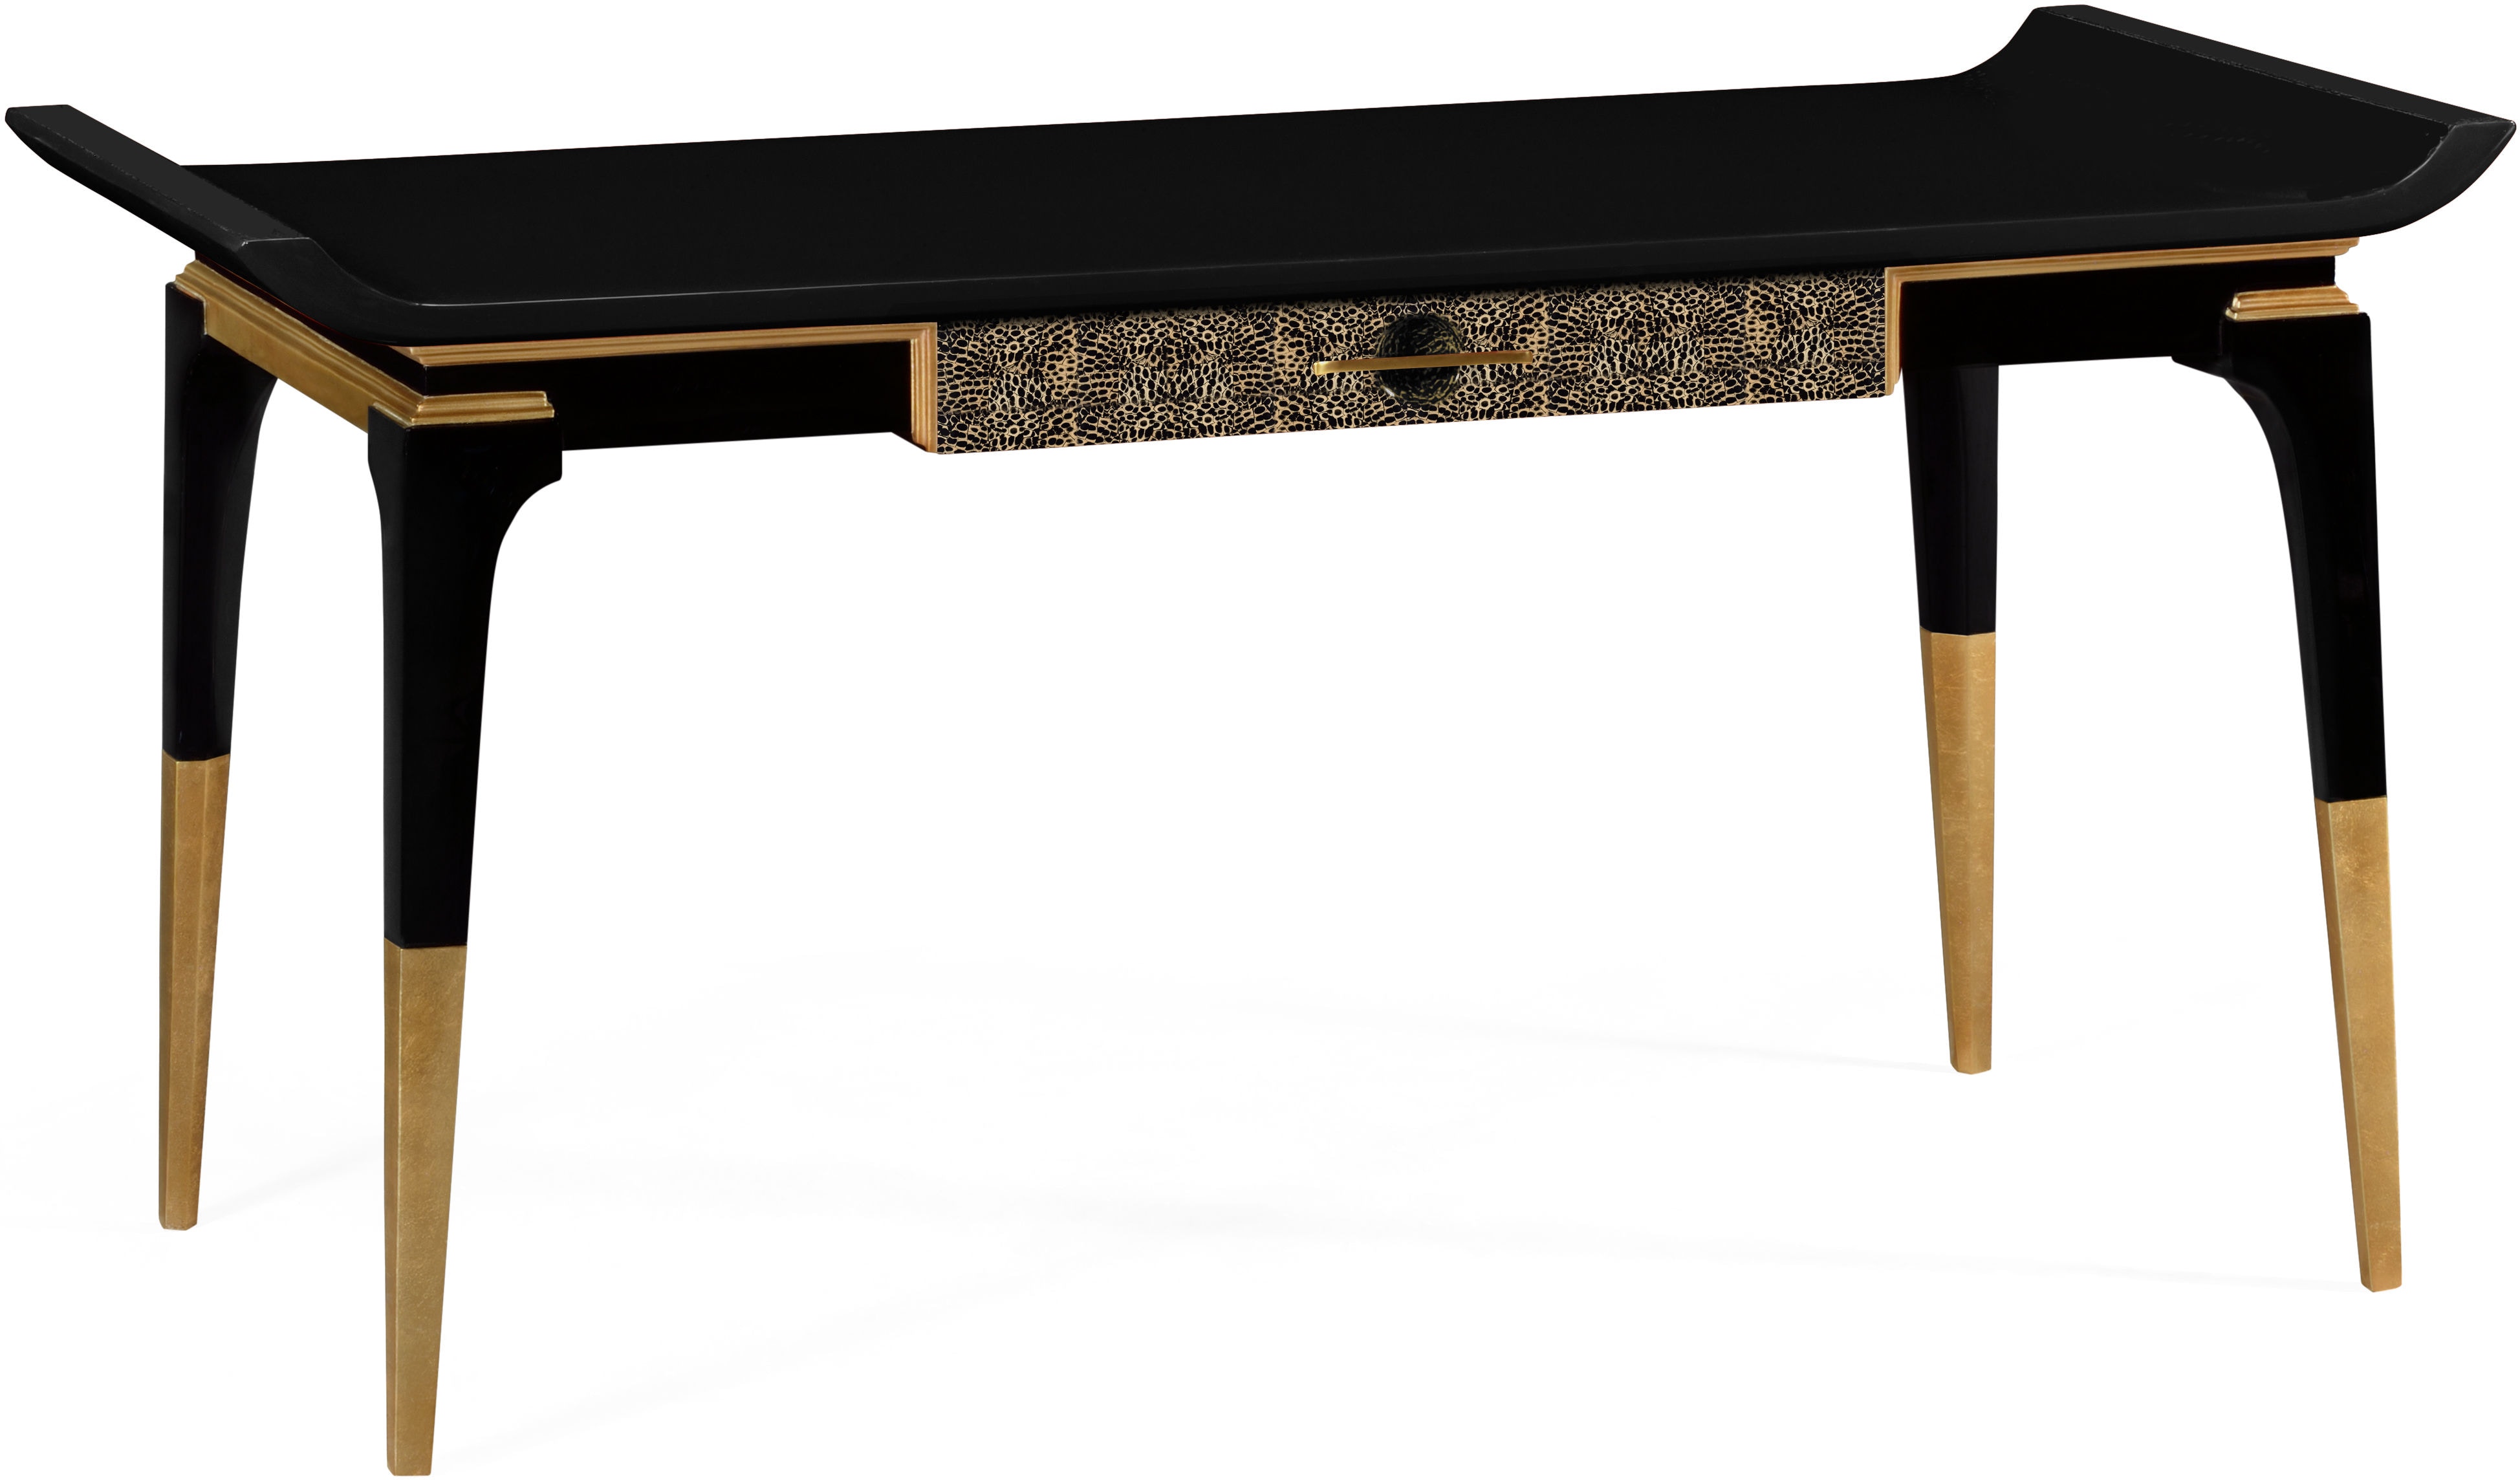 Black Eggshell Laquer Desk With Gold Leaf Legs Qj495579blg